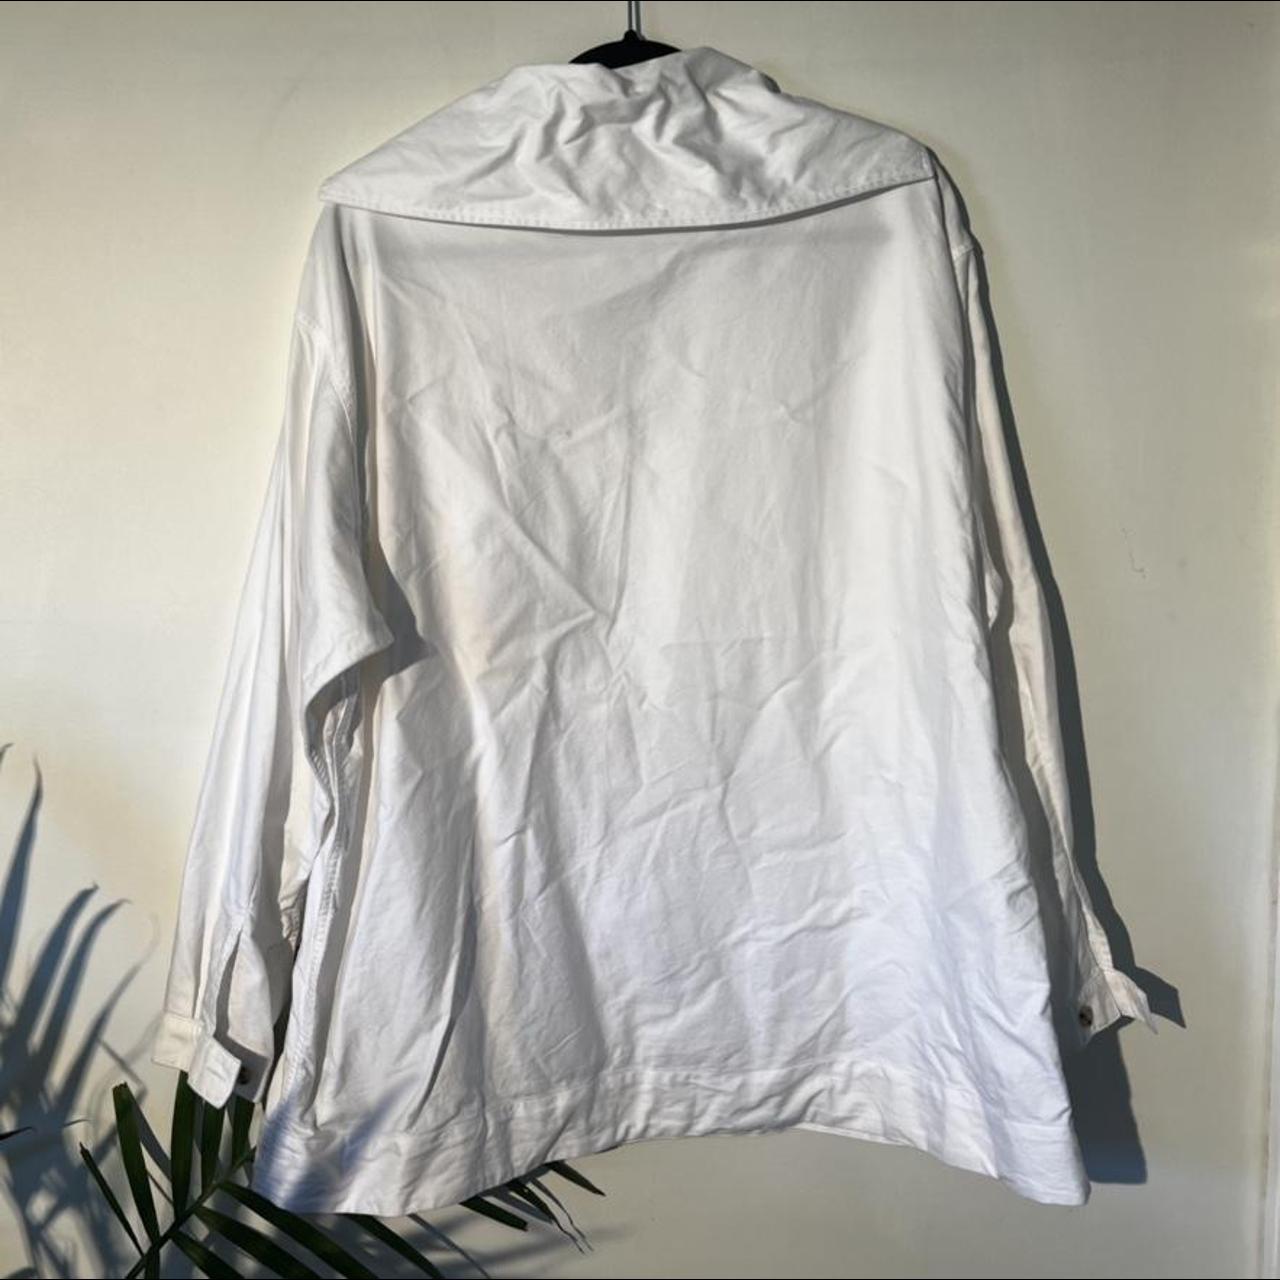 Djerf Avenue Women's White Shirt (3)